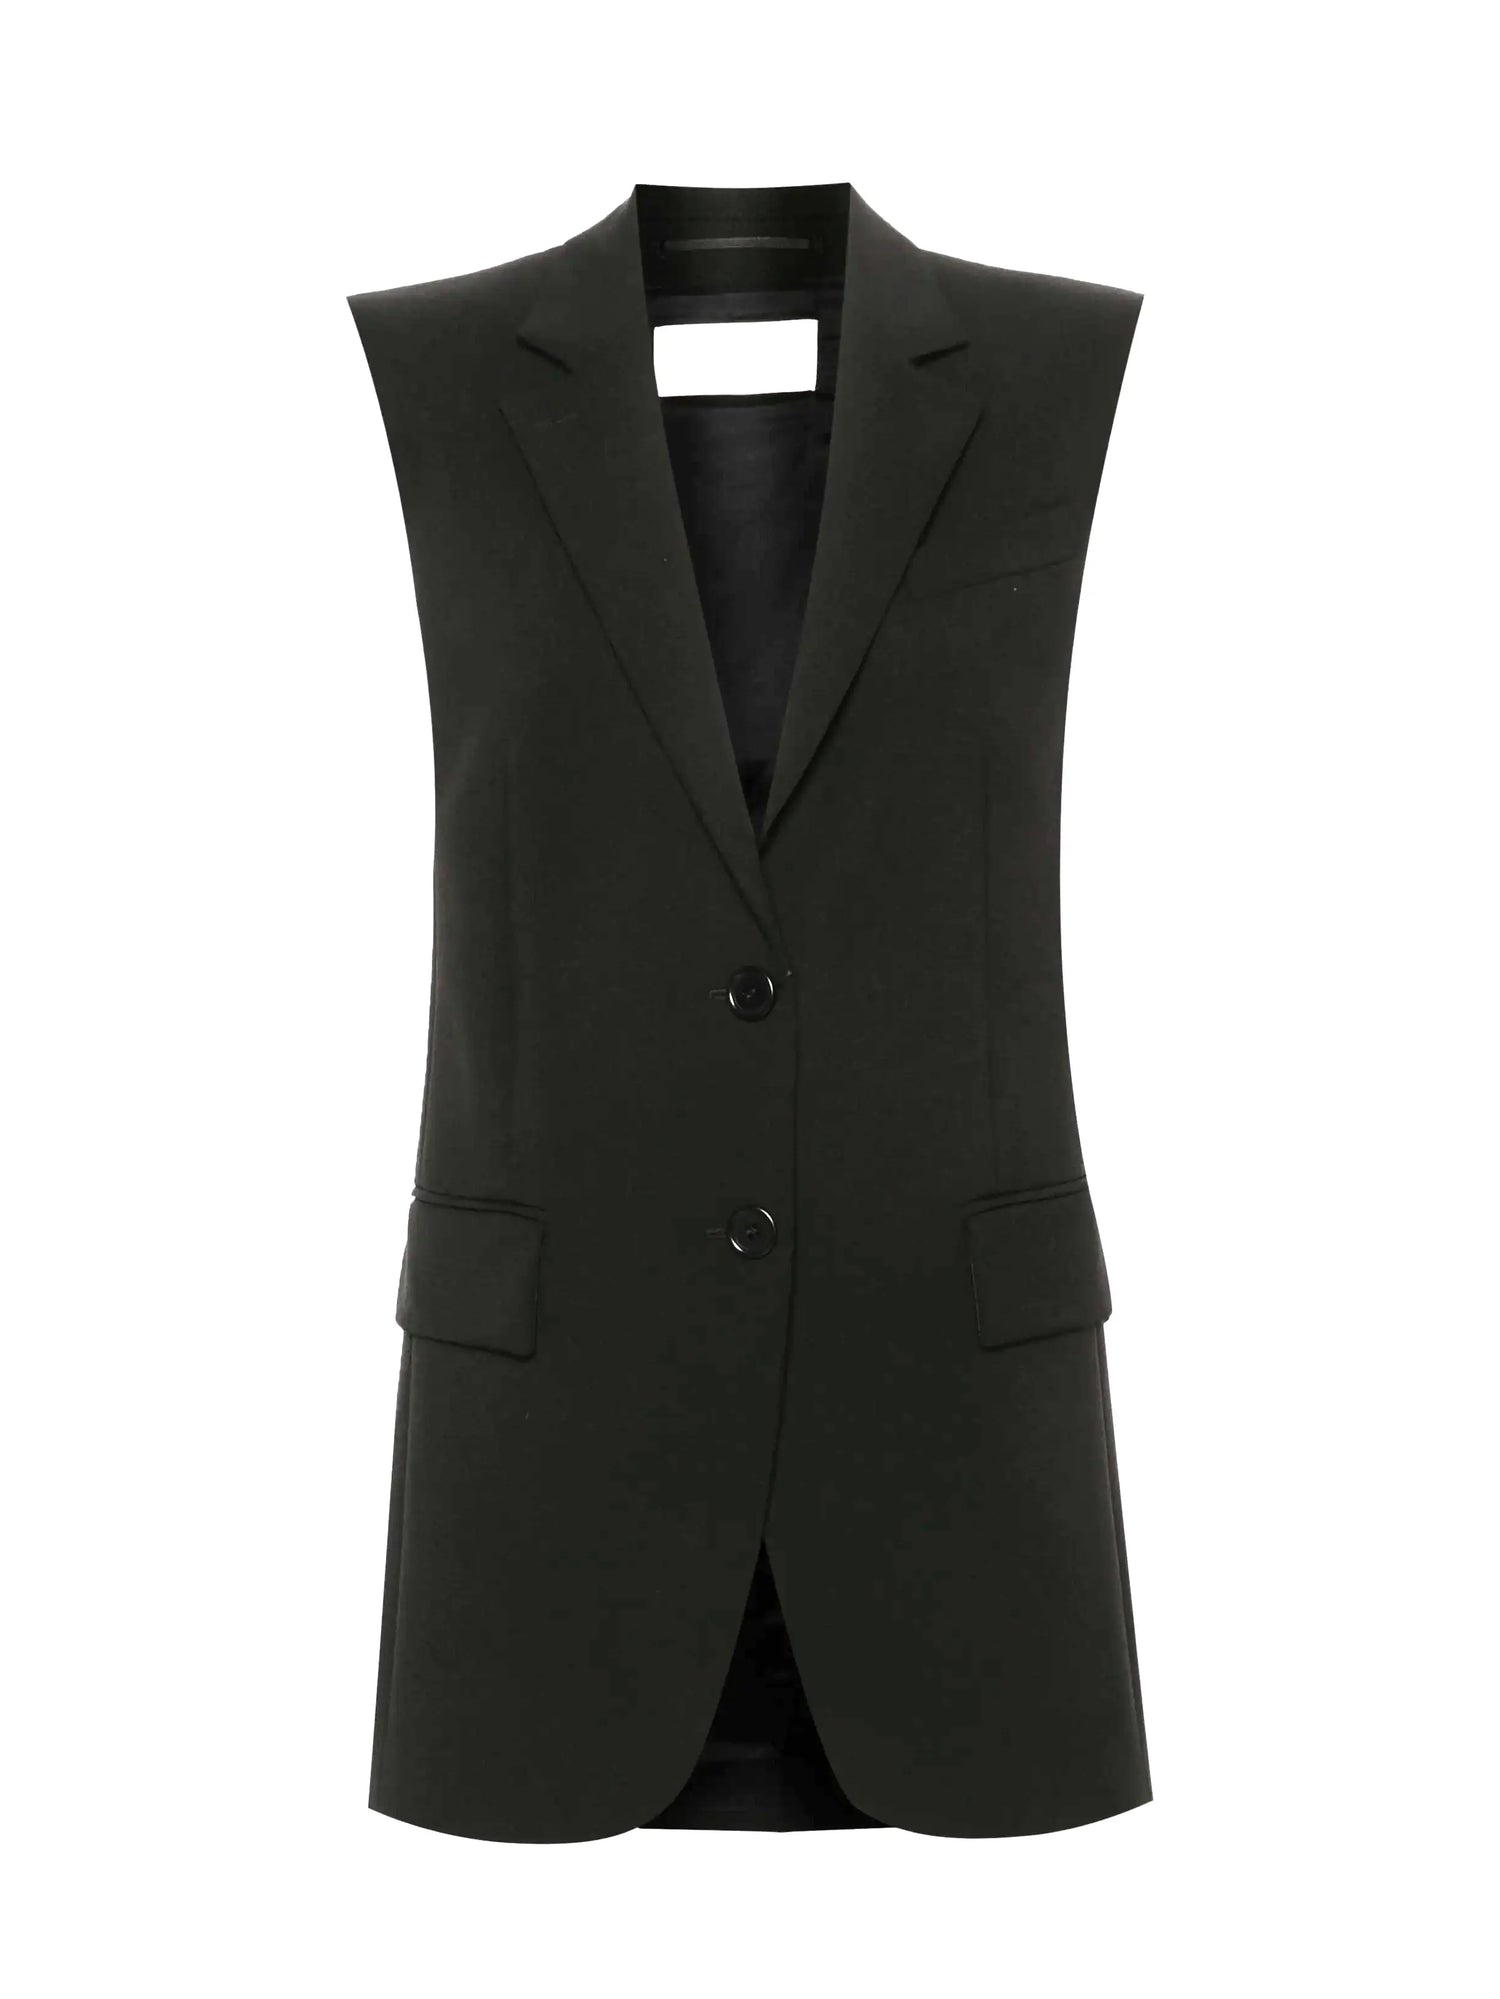 PARANA sleeveless wool blazer, black